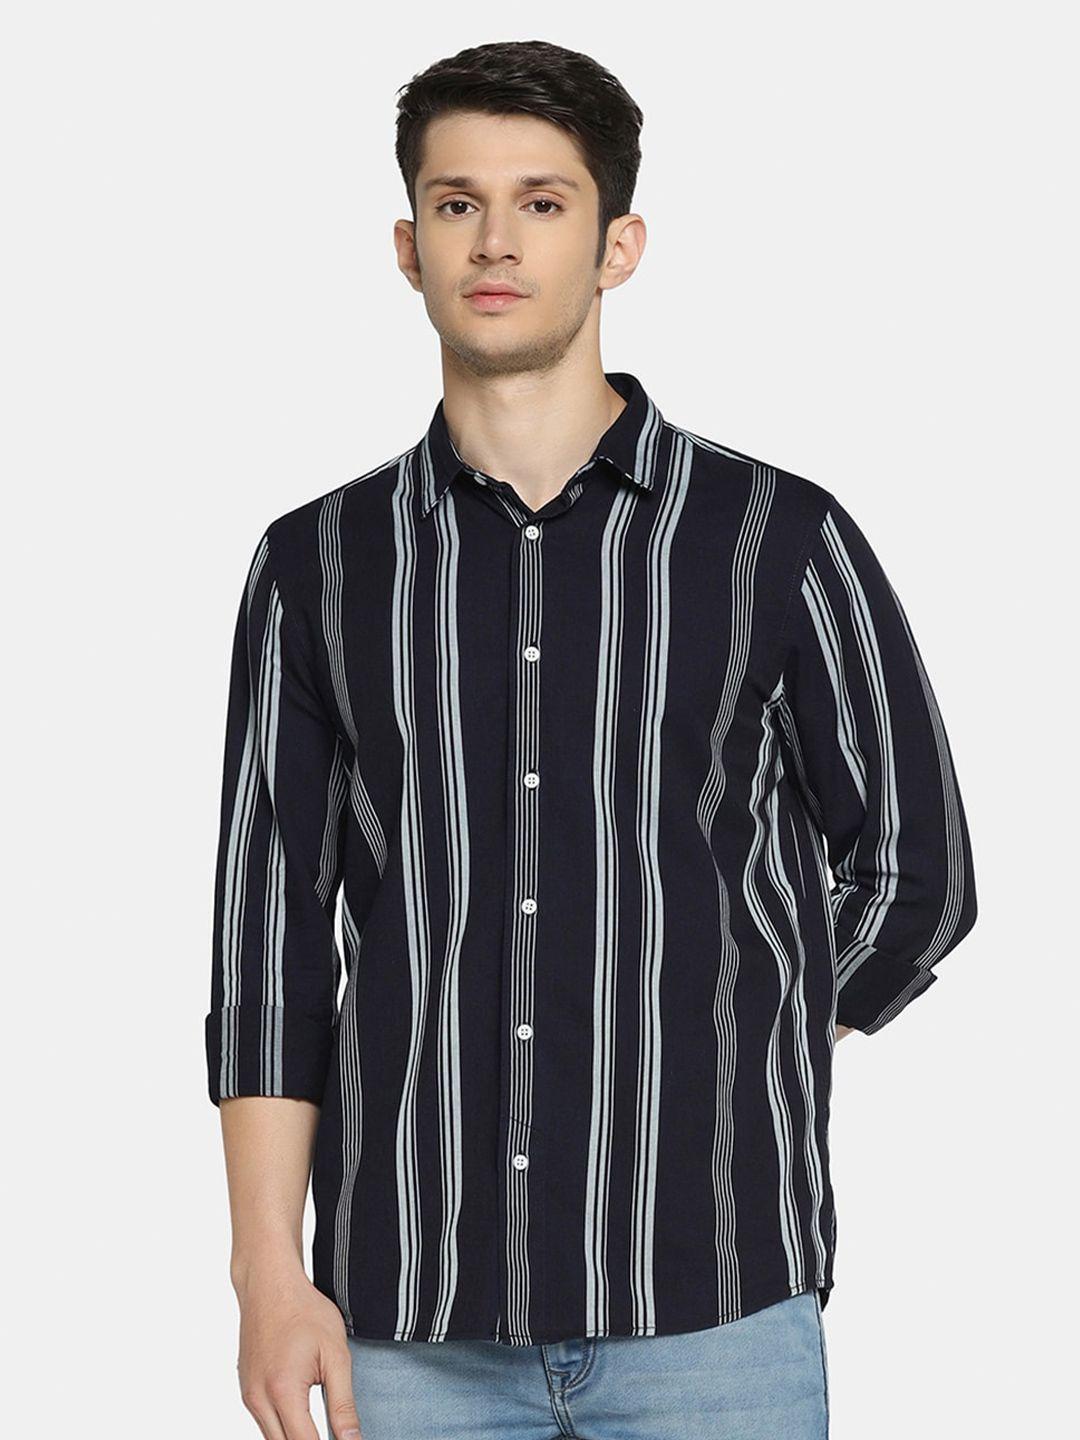 blackberrys men slim fit striped cotton casual shirt